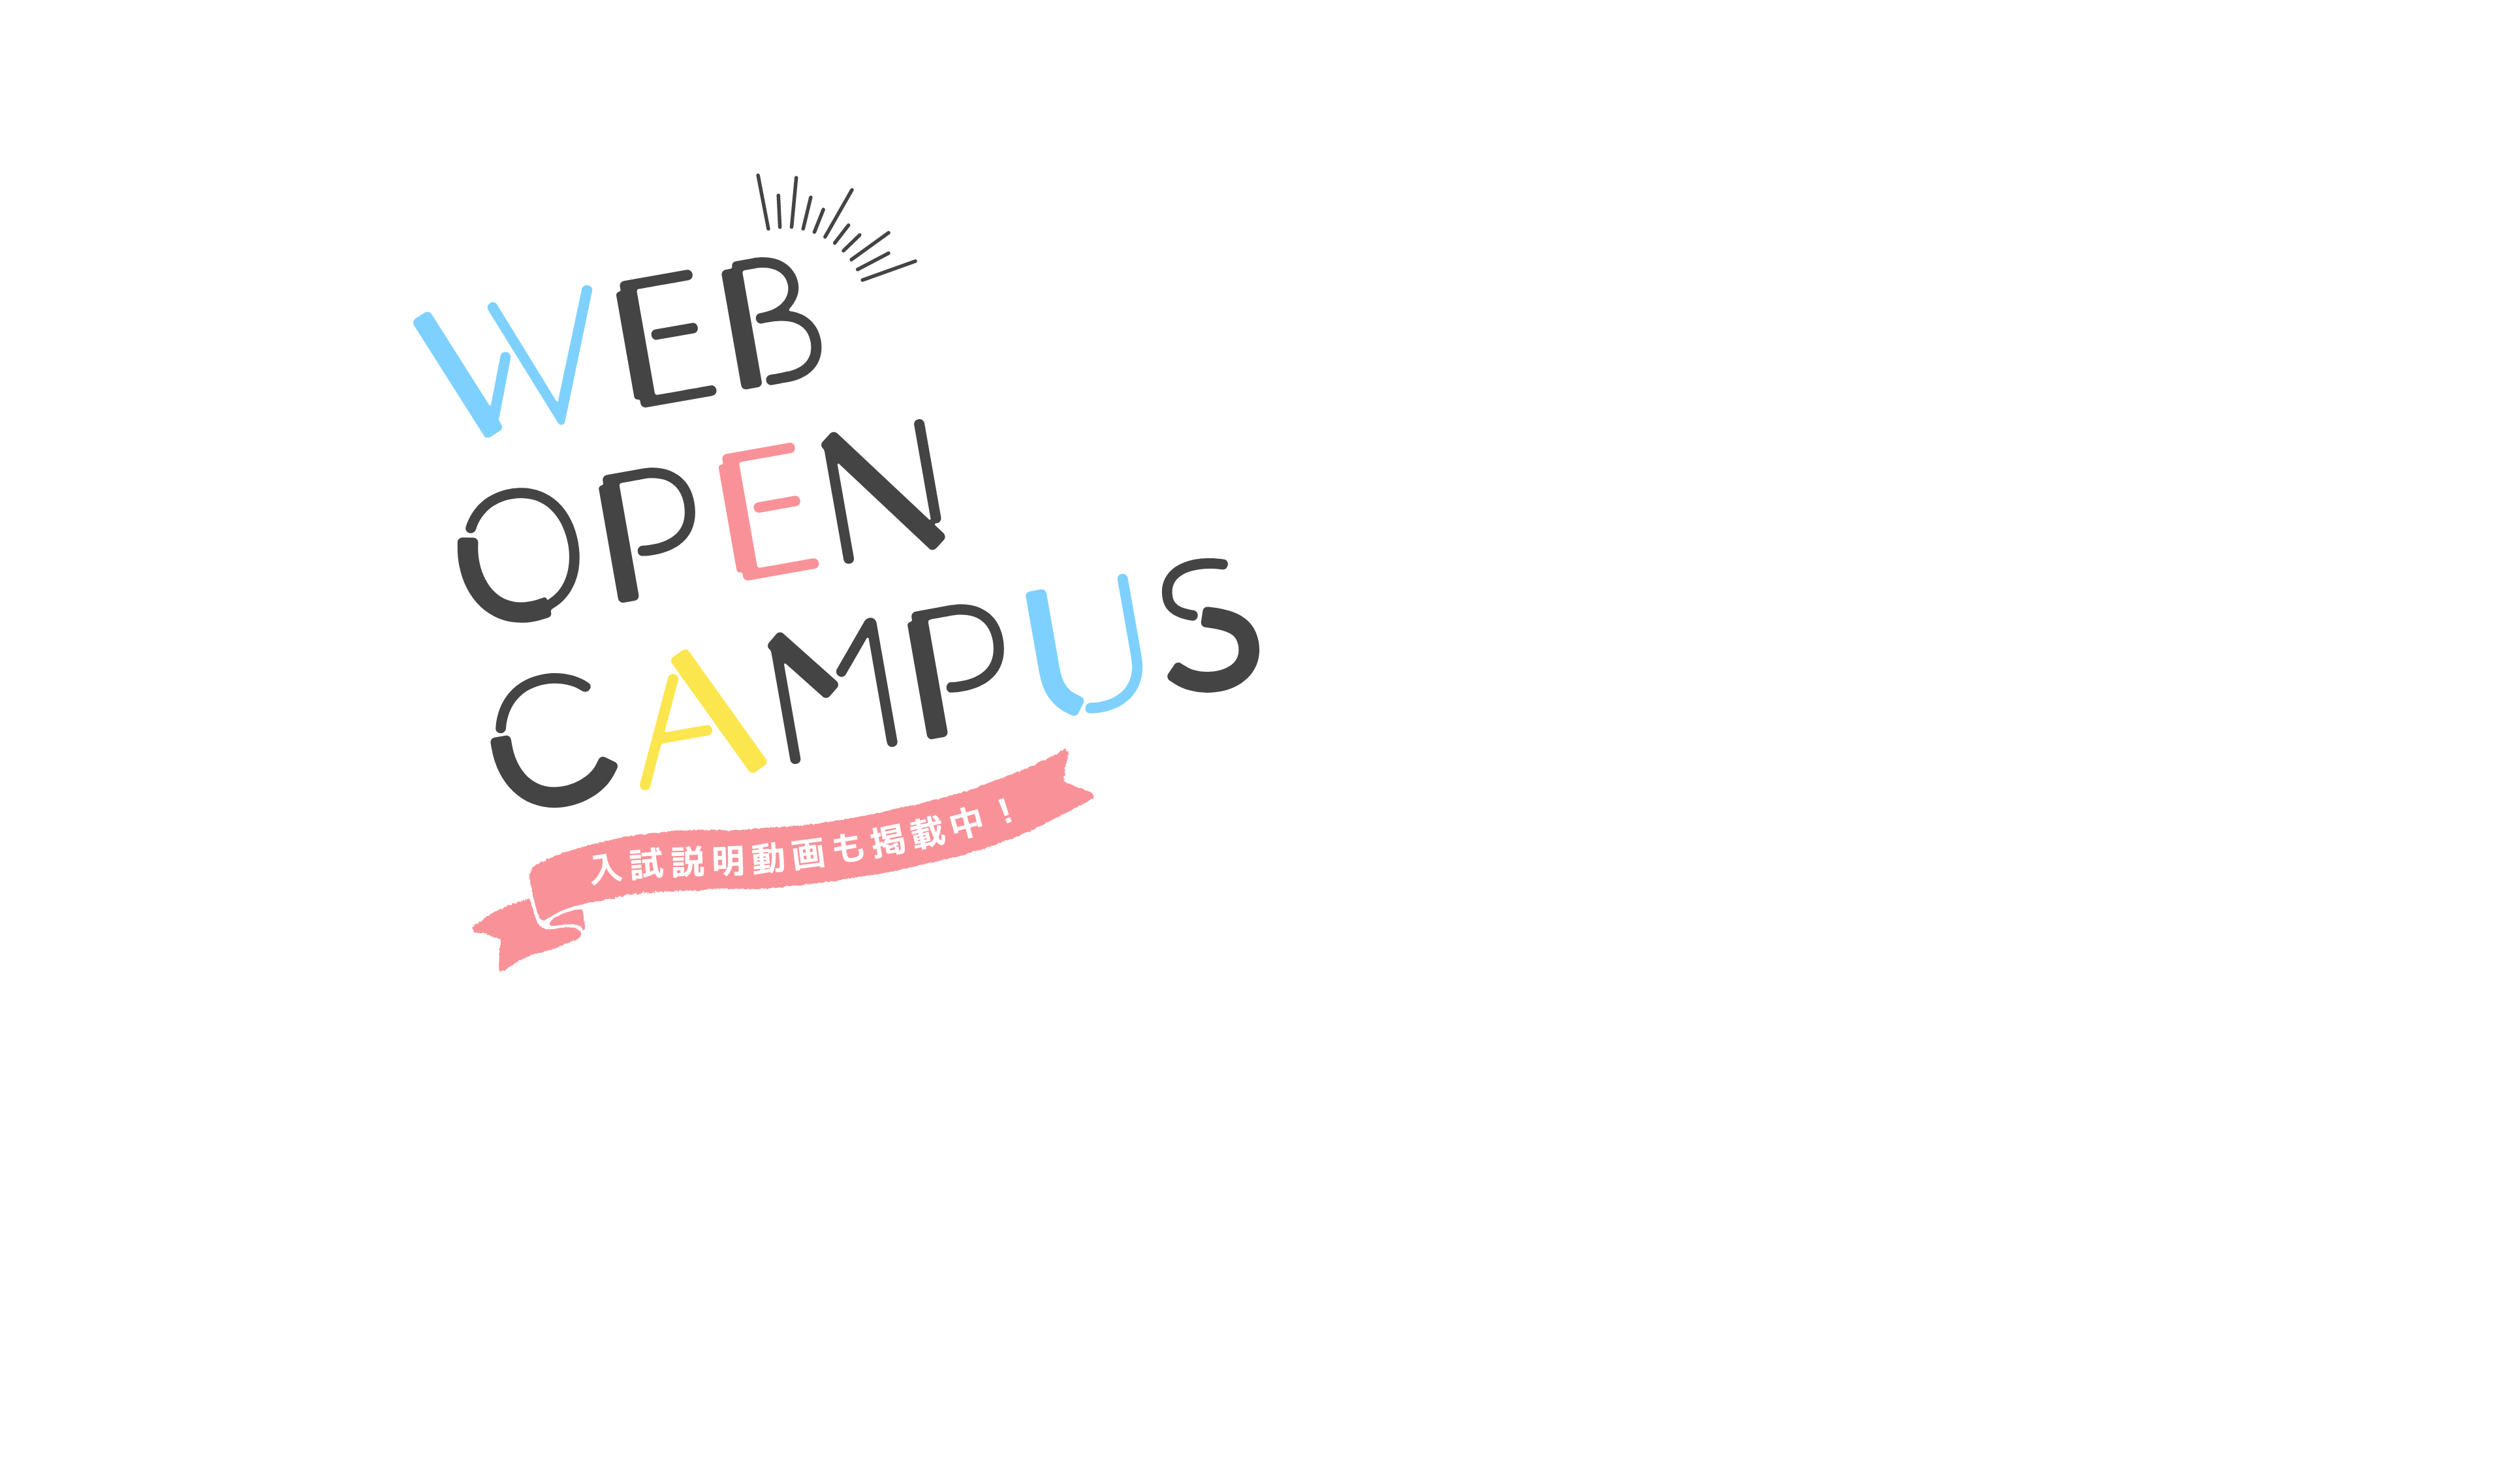 WEB OPEN CAMPUS